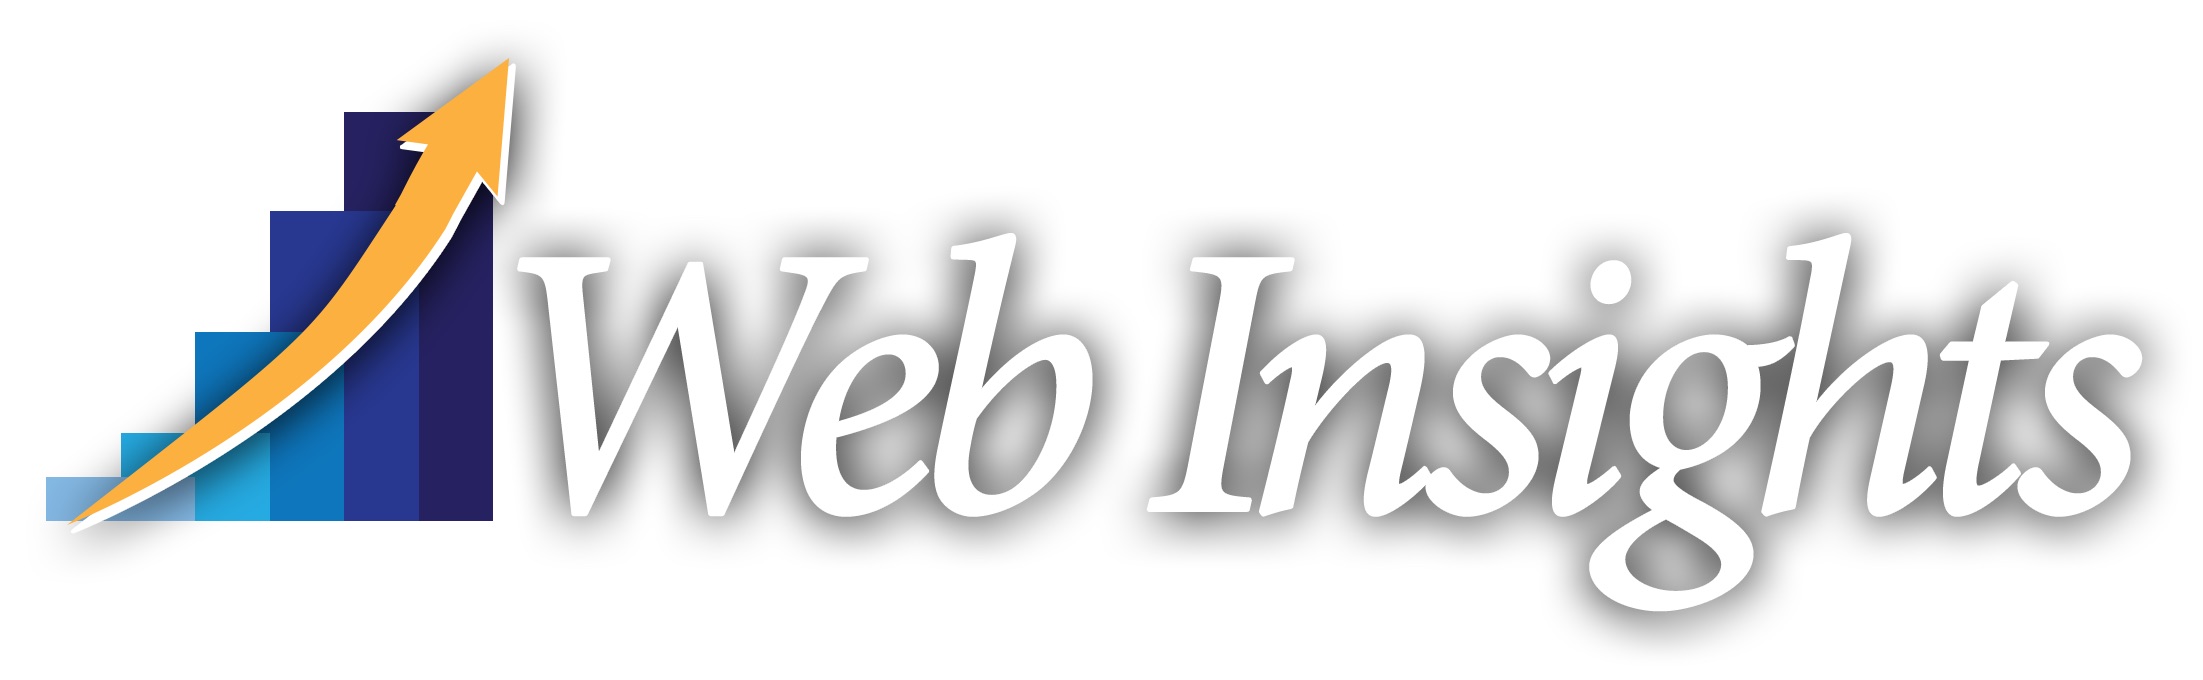 Web Insights, LLC